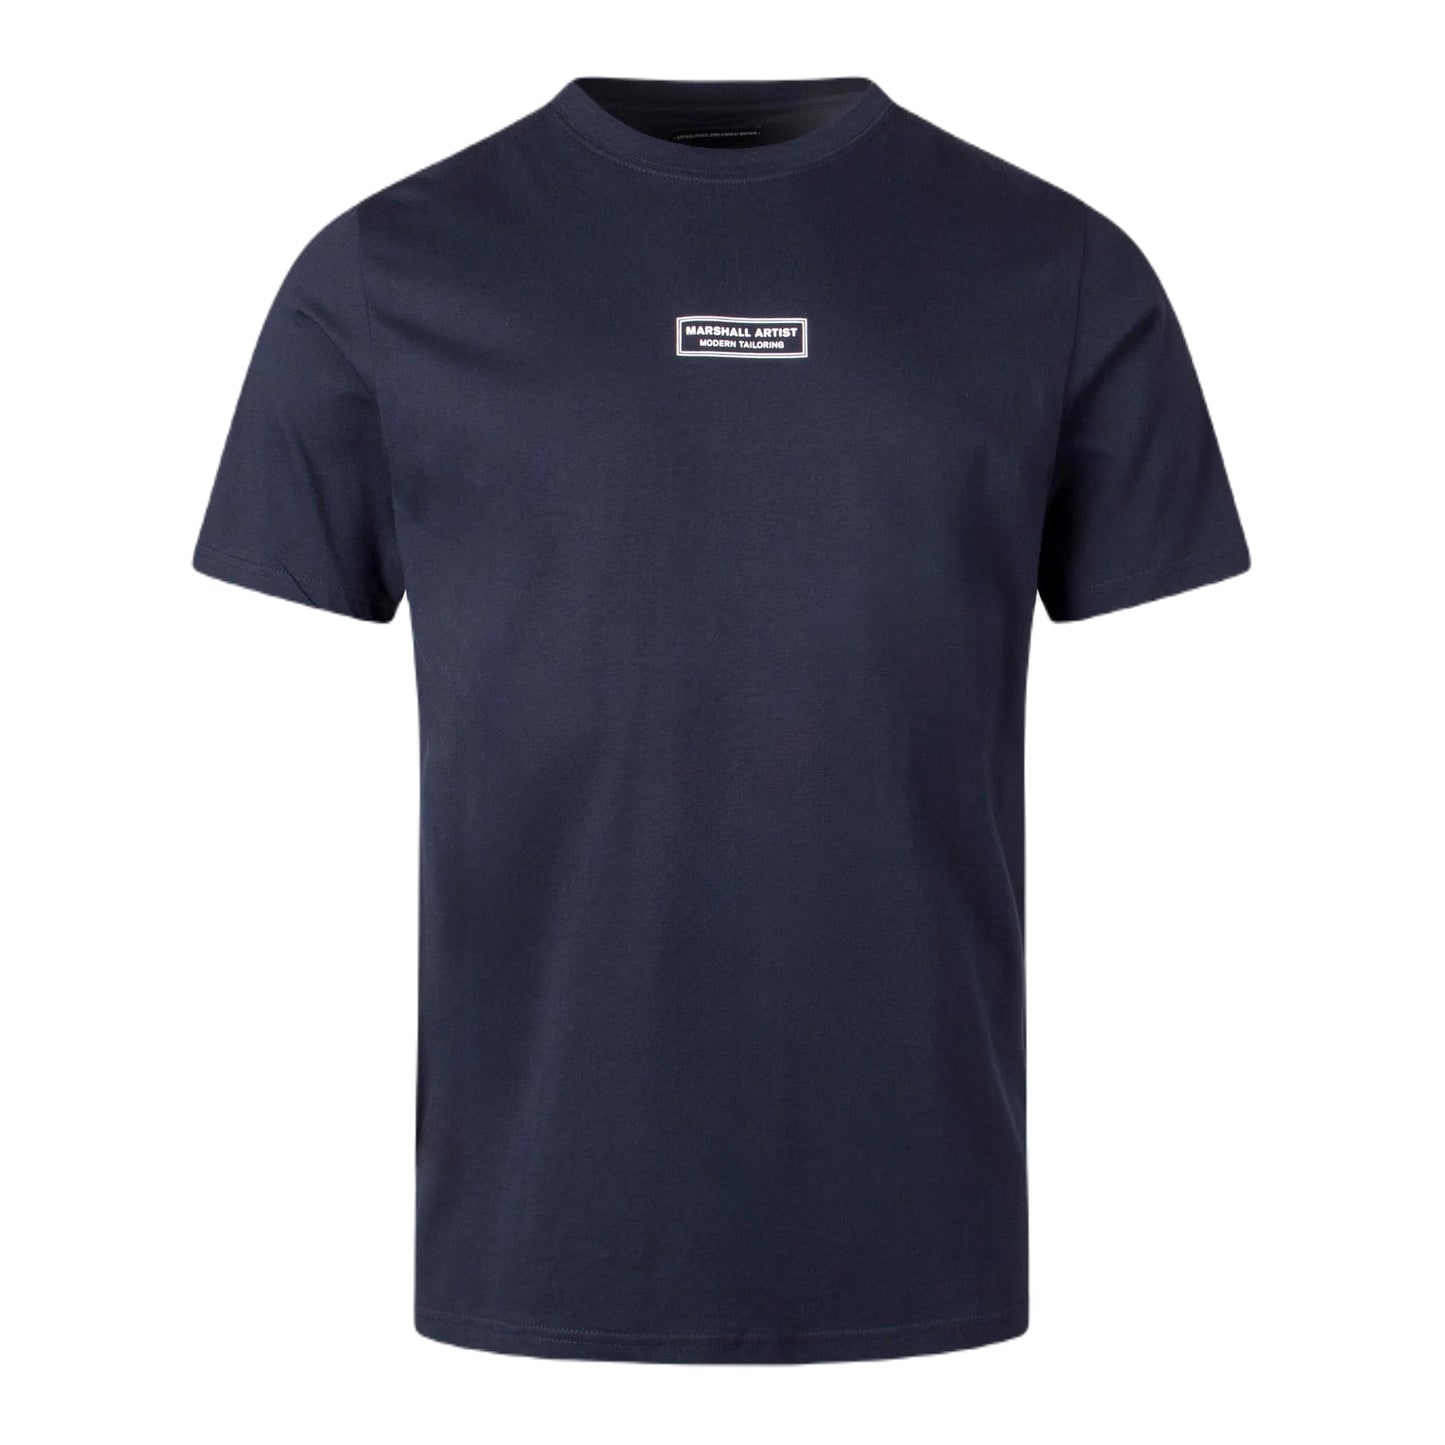 Marshall Artist Injection T-Shirt - Navy - Escape Menswear